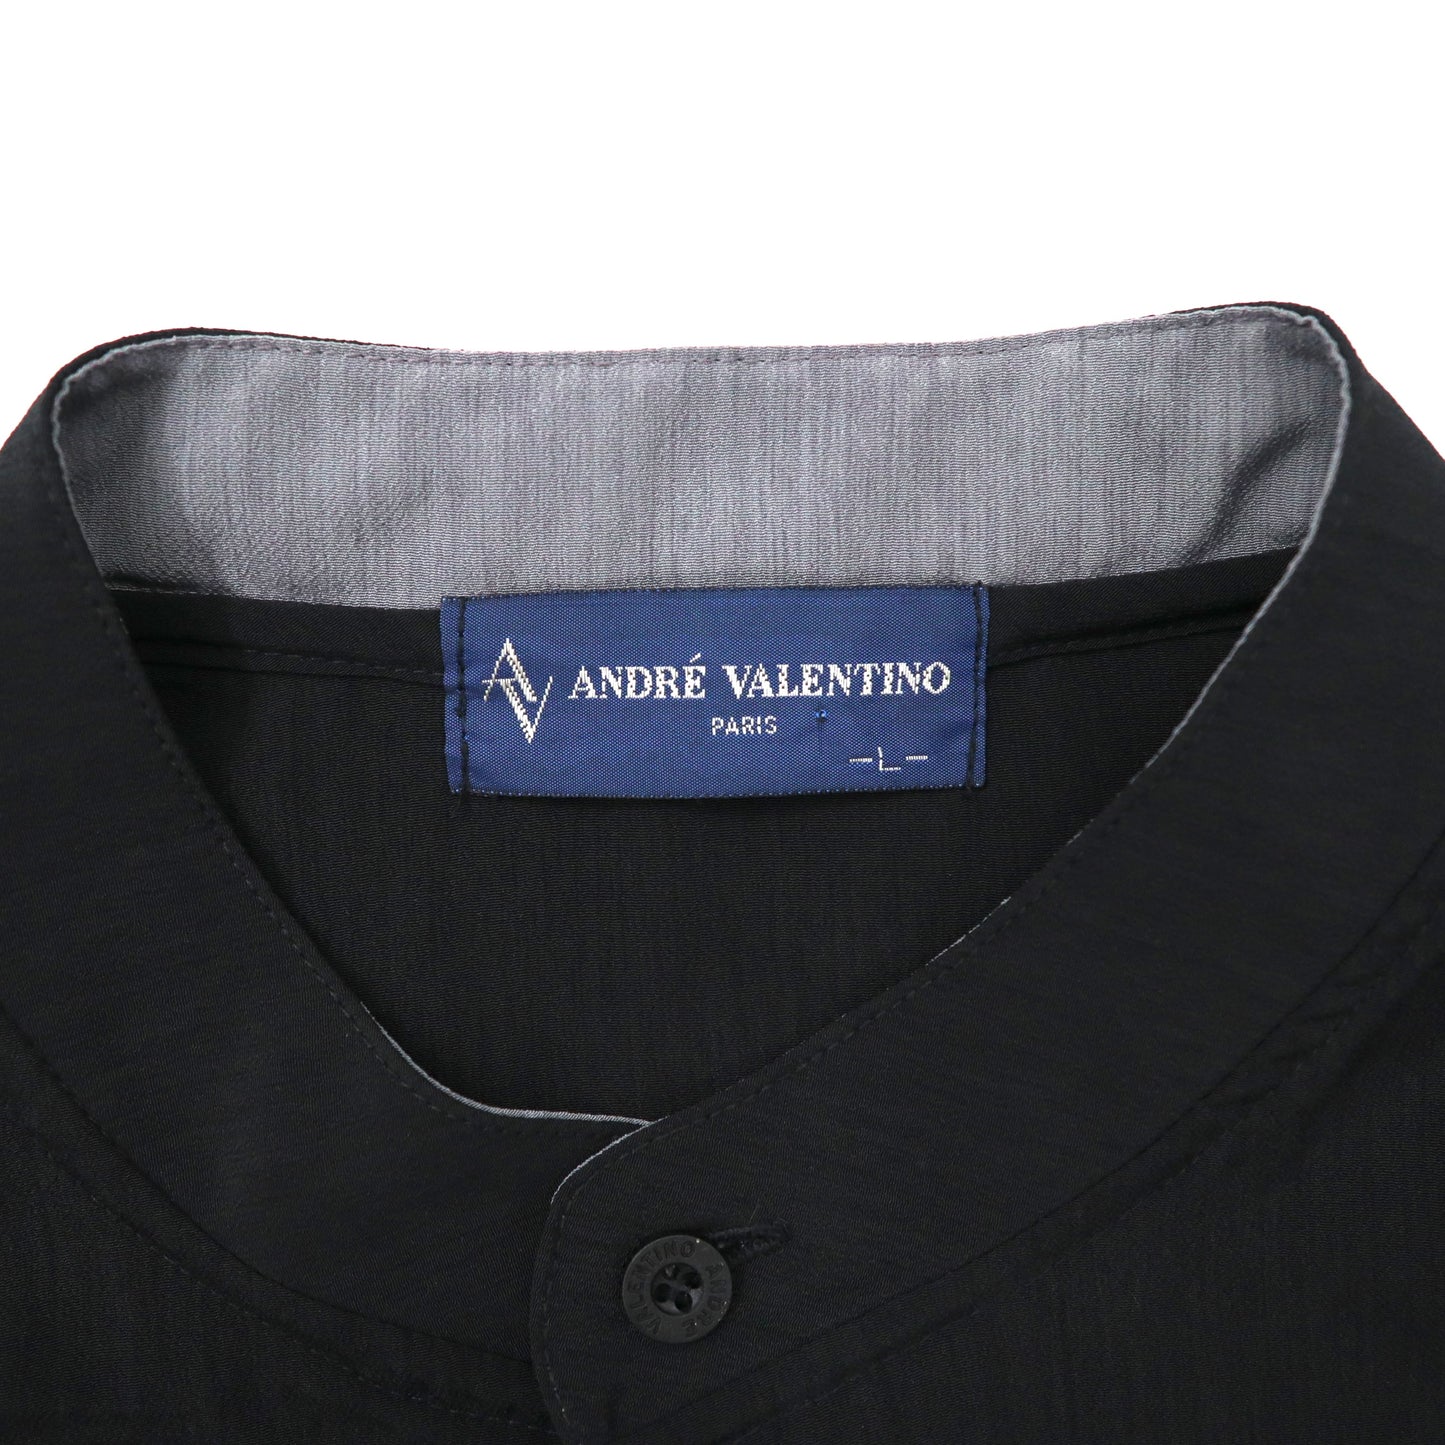 ANDRE VALENTINO スタンドカラー プルオーバーシャツ L ブラック ポリエステル ロゴ刺繍 90年代